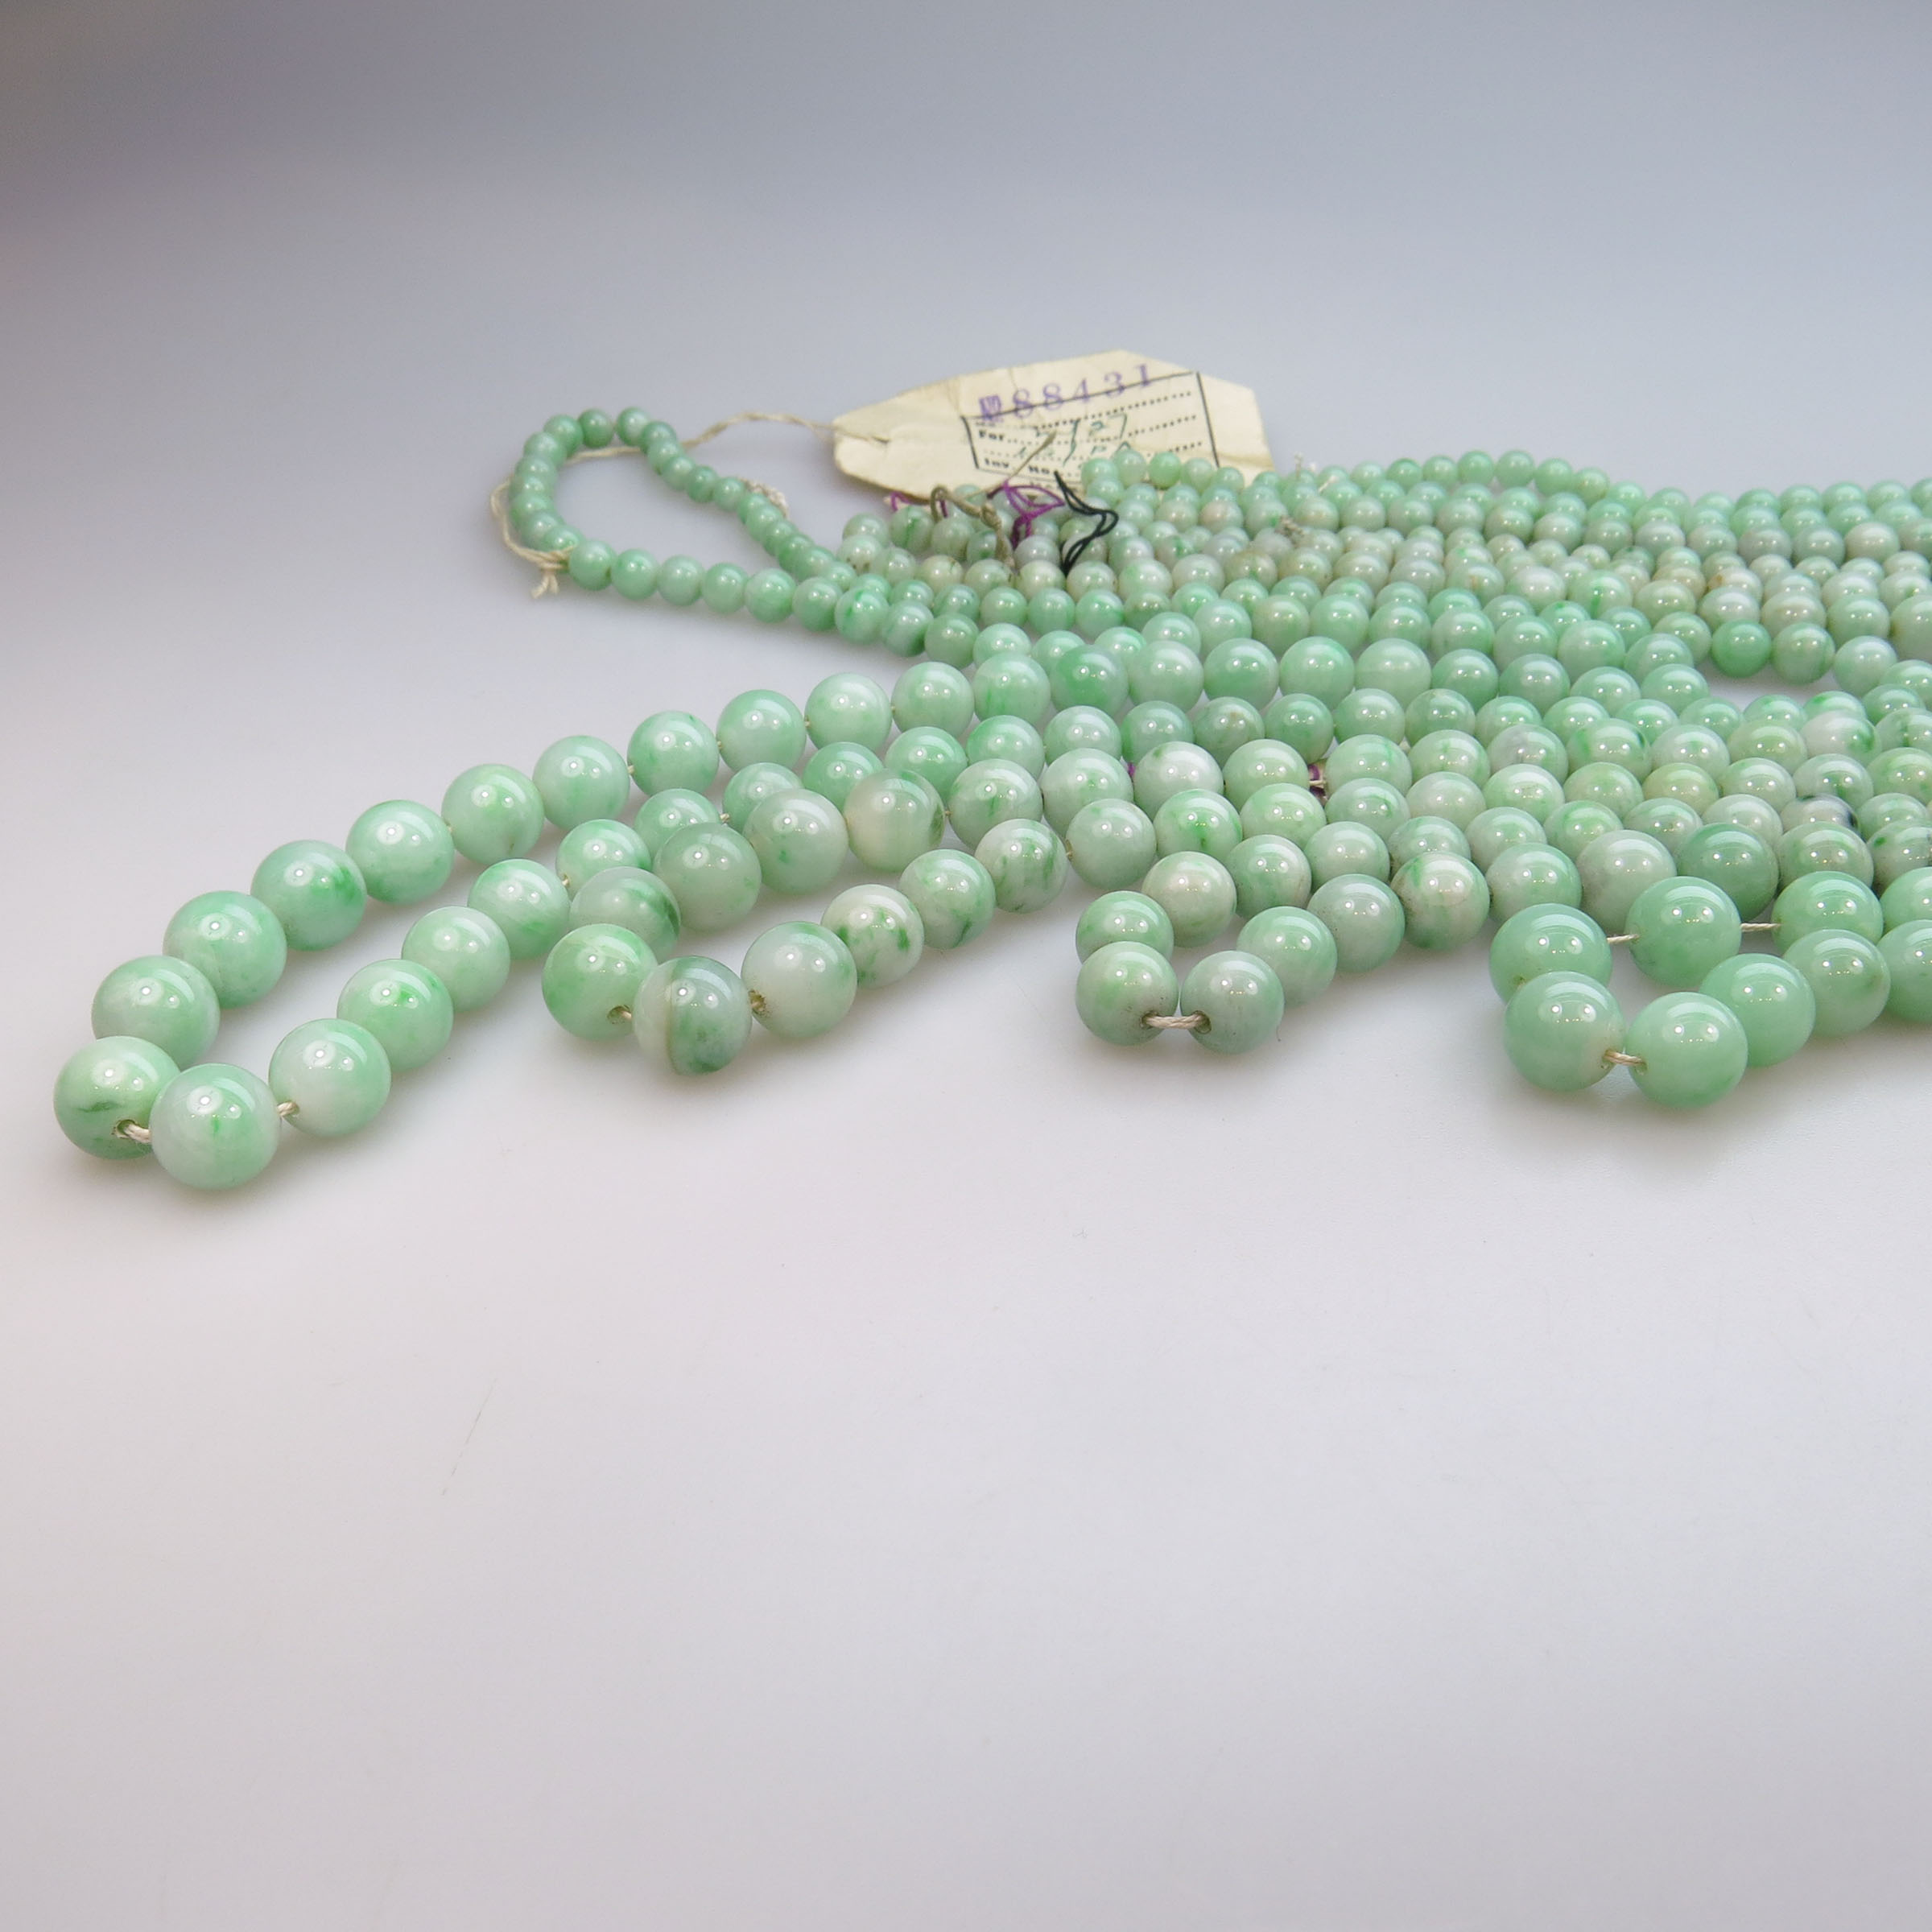 4 Graduated Strands Of Jadeite Beads